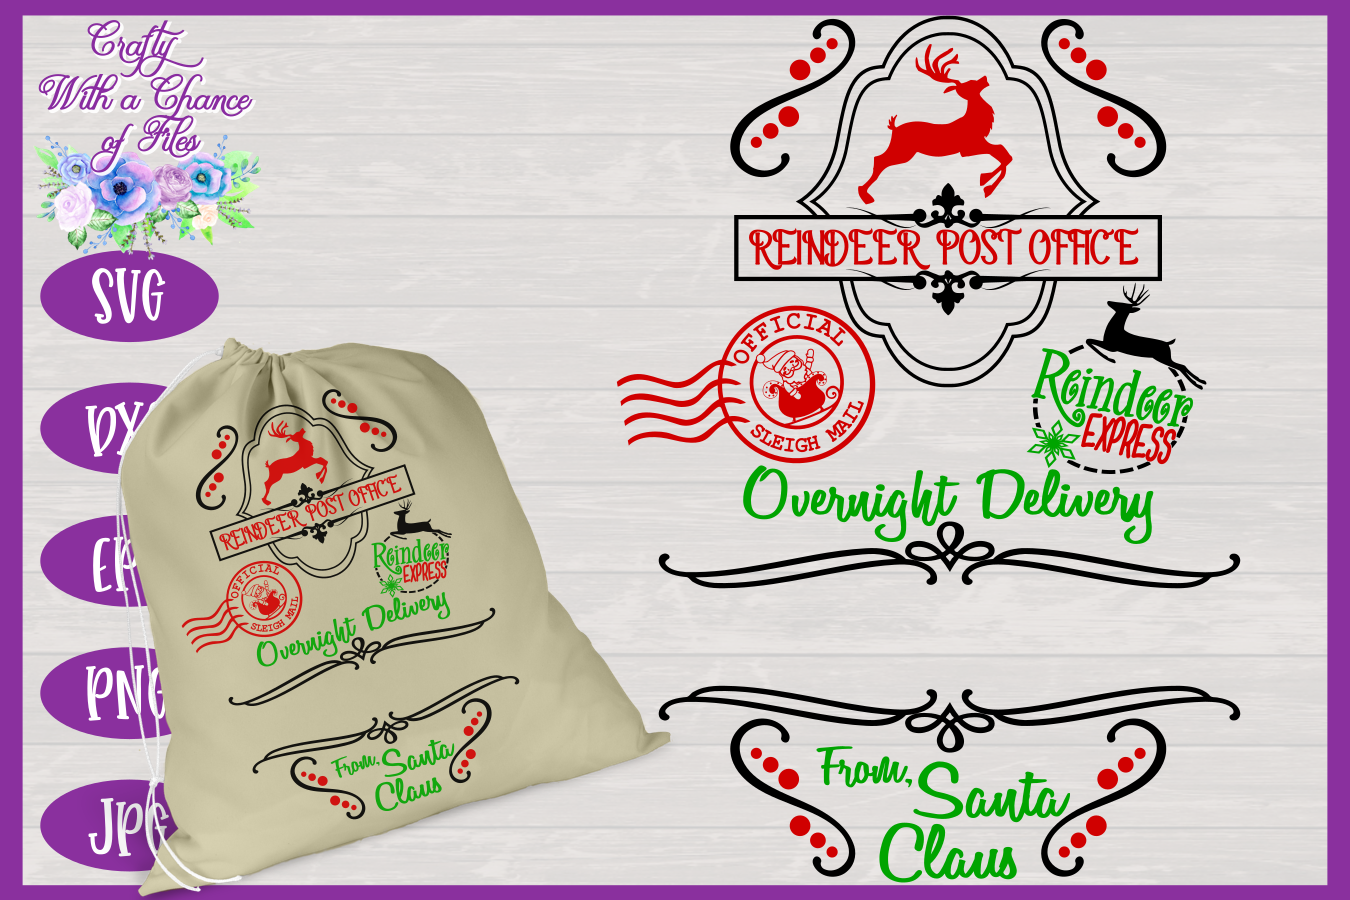 Download Christmas Svg Santa Gift Sack Svg Christmas Present Bag Svg By Crafty With A Chance Of Files Thehungryjpeg Com